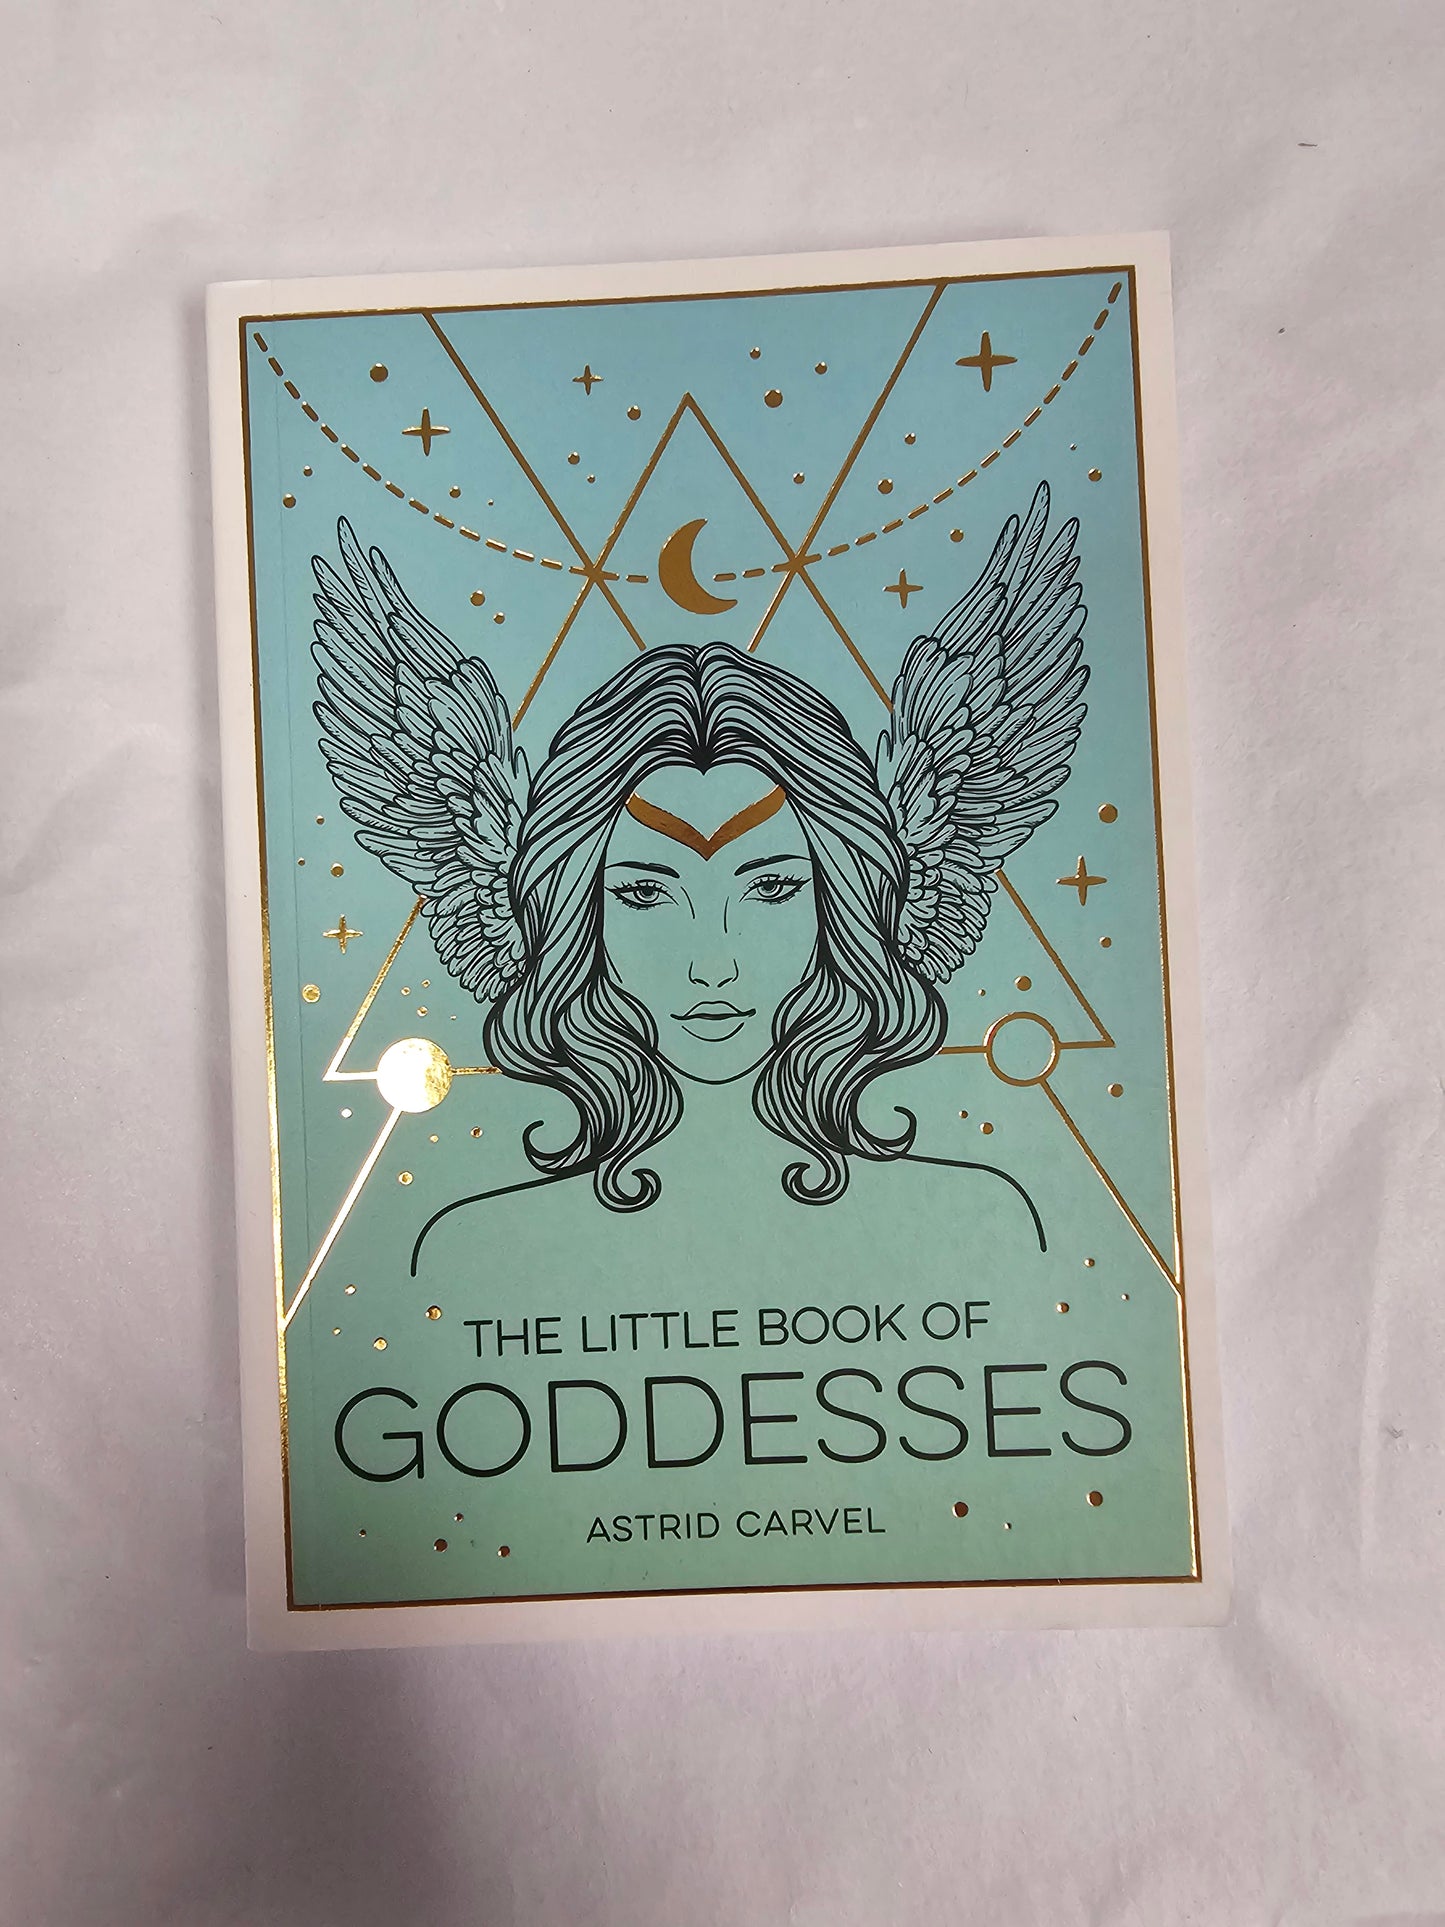 The Little book of Goddesses